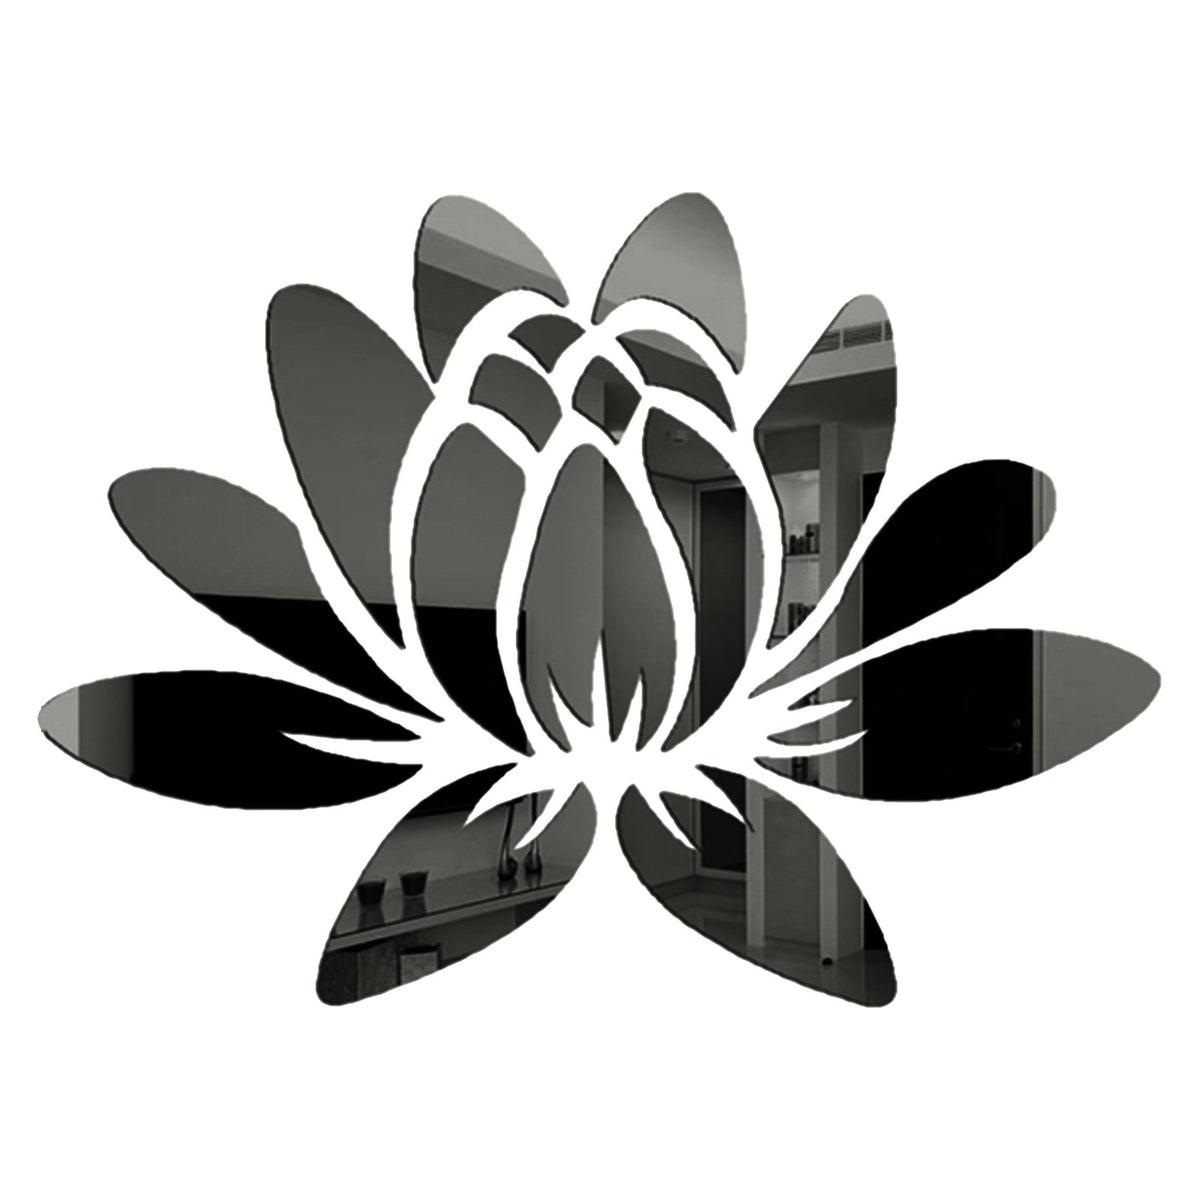 3D Lotus Flower Mirror